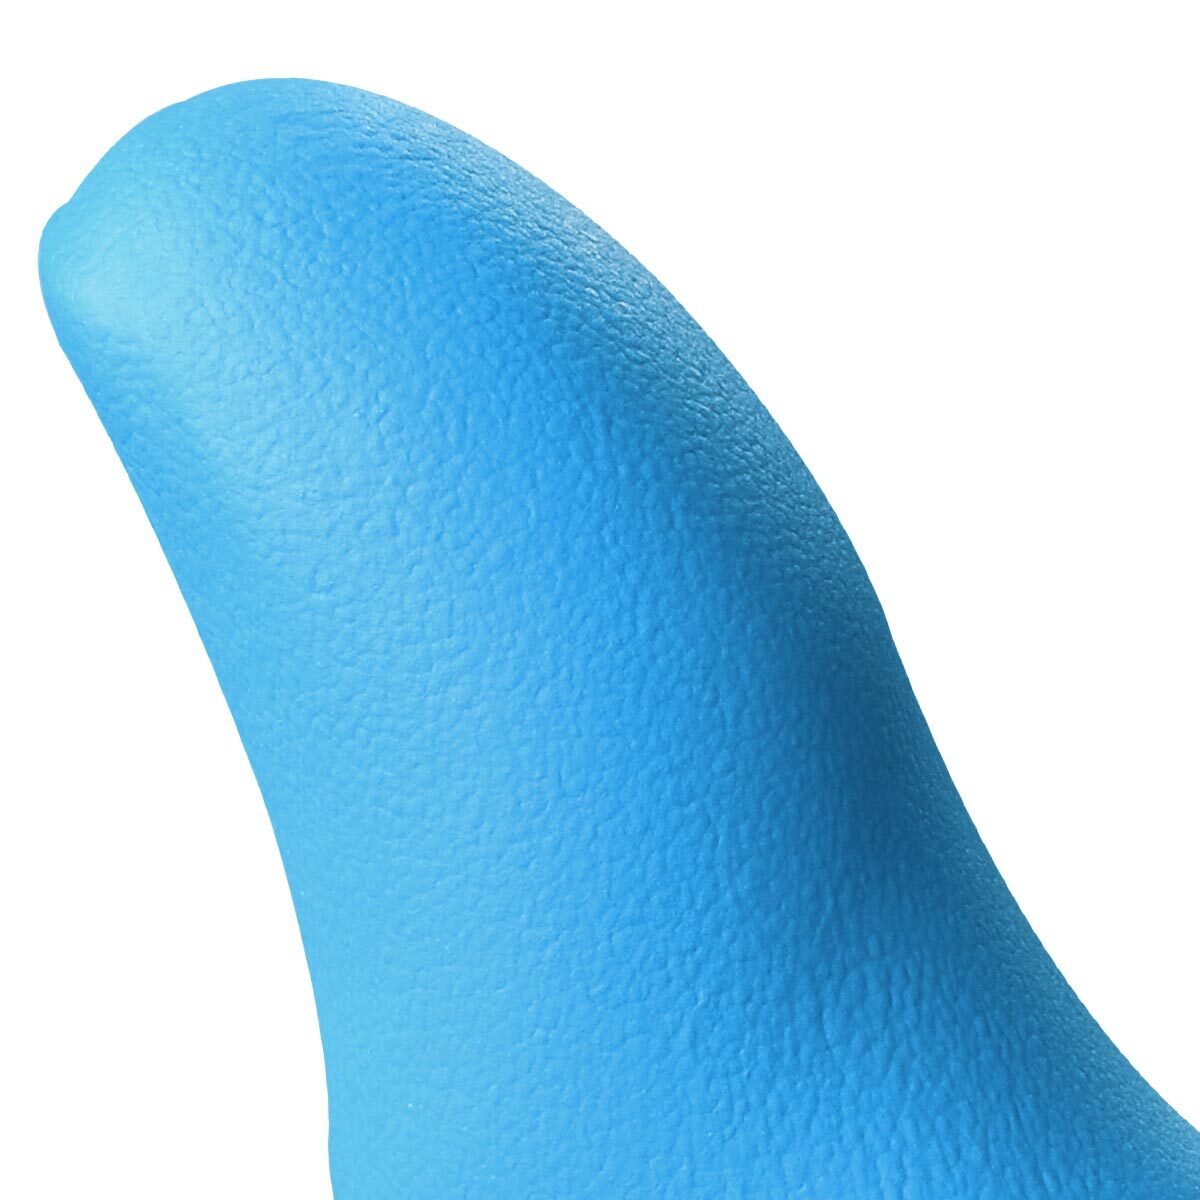 Gekko Grip Nitrile Gloves, Long Cuff - Blue